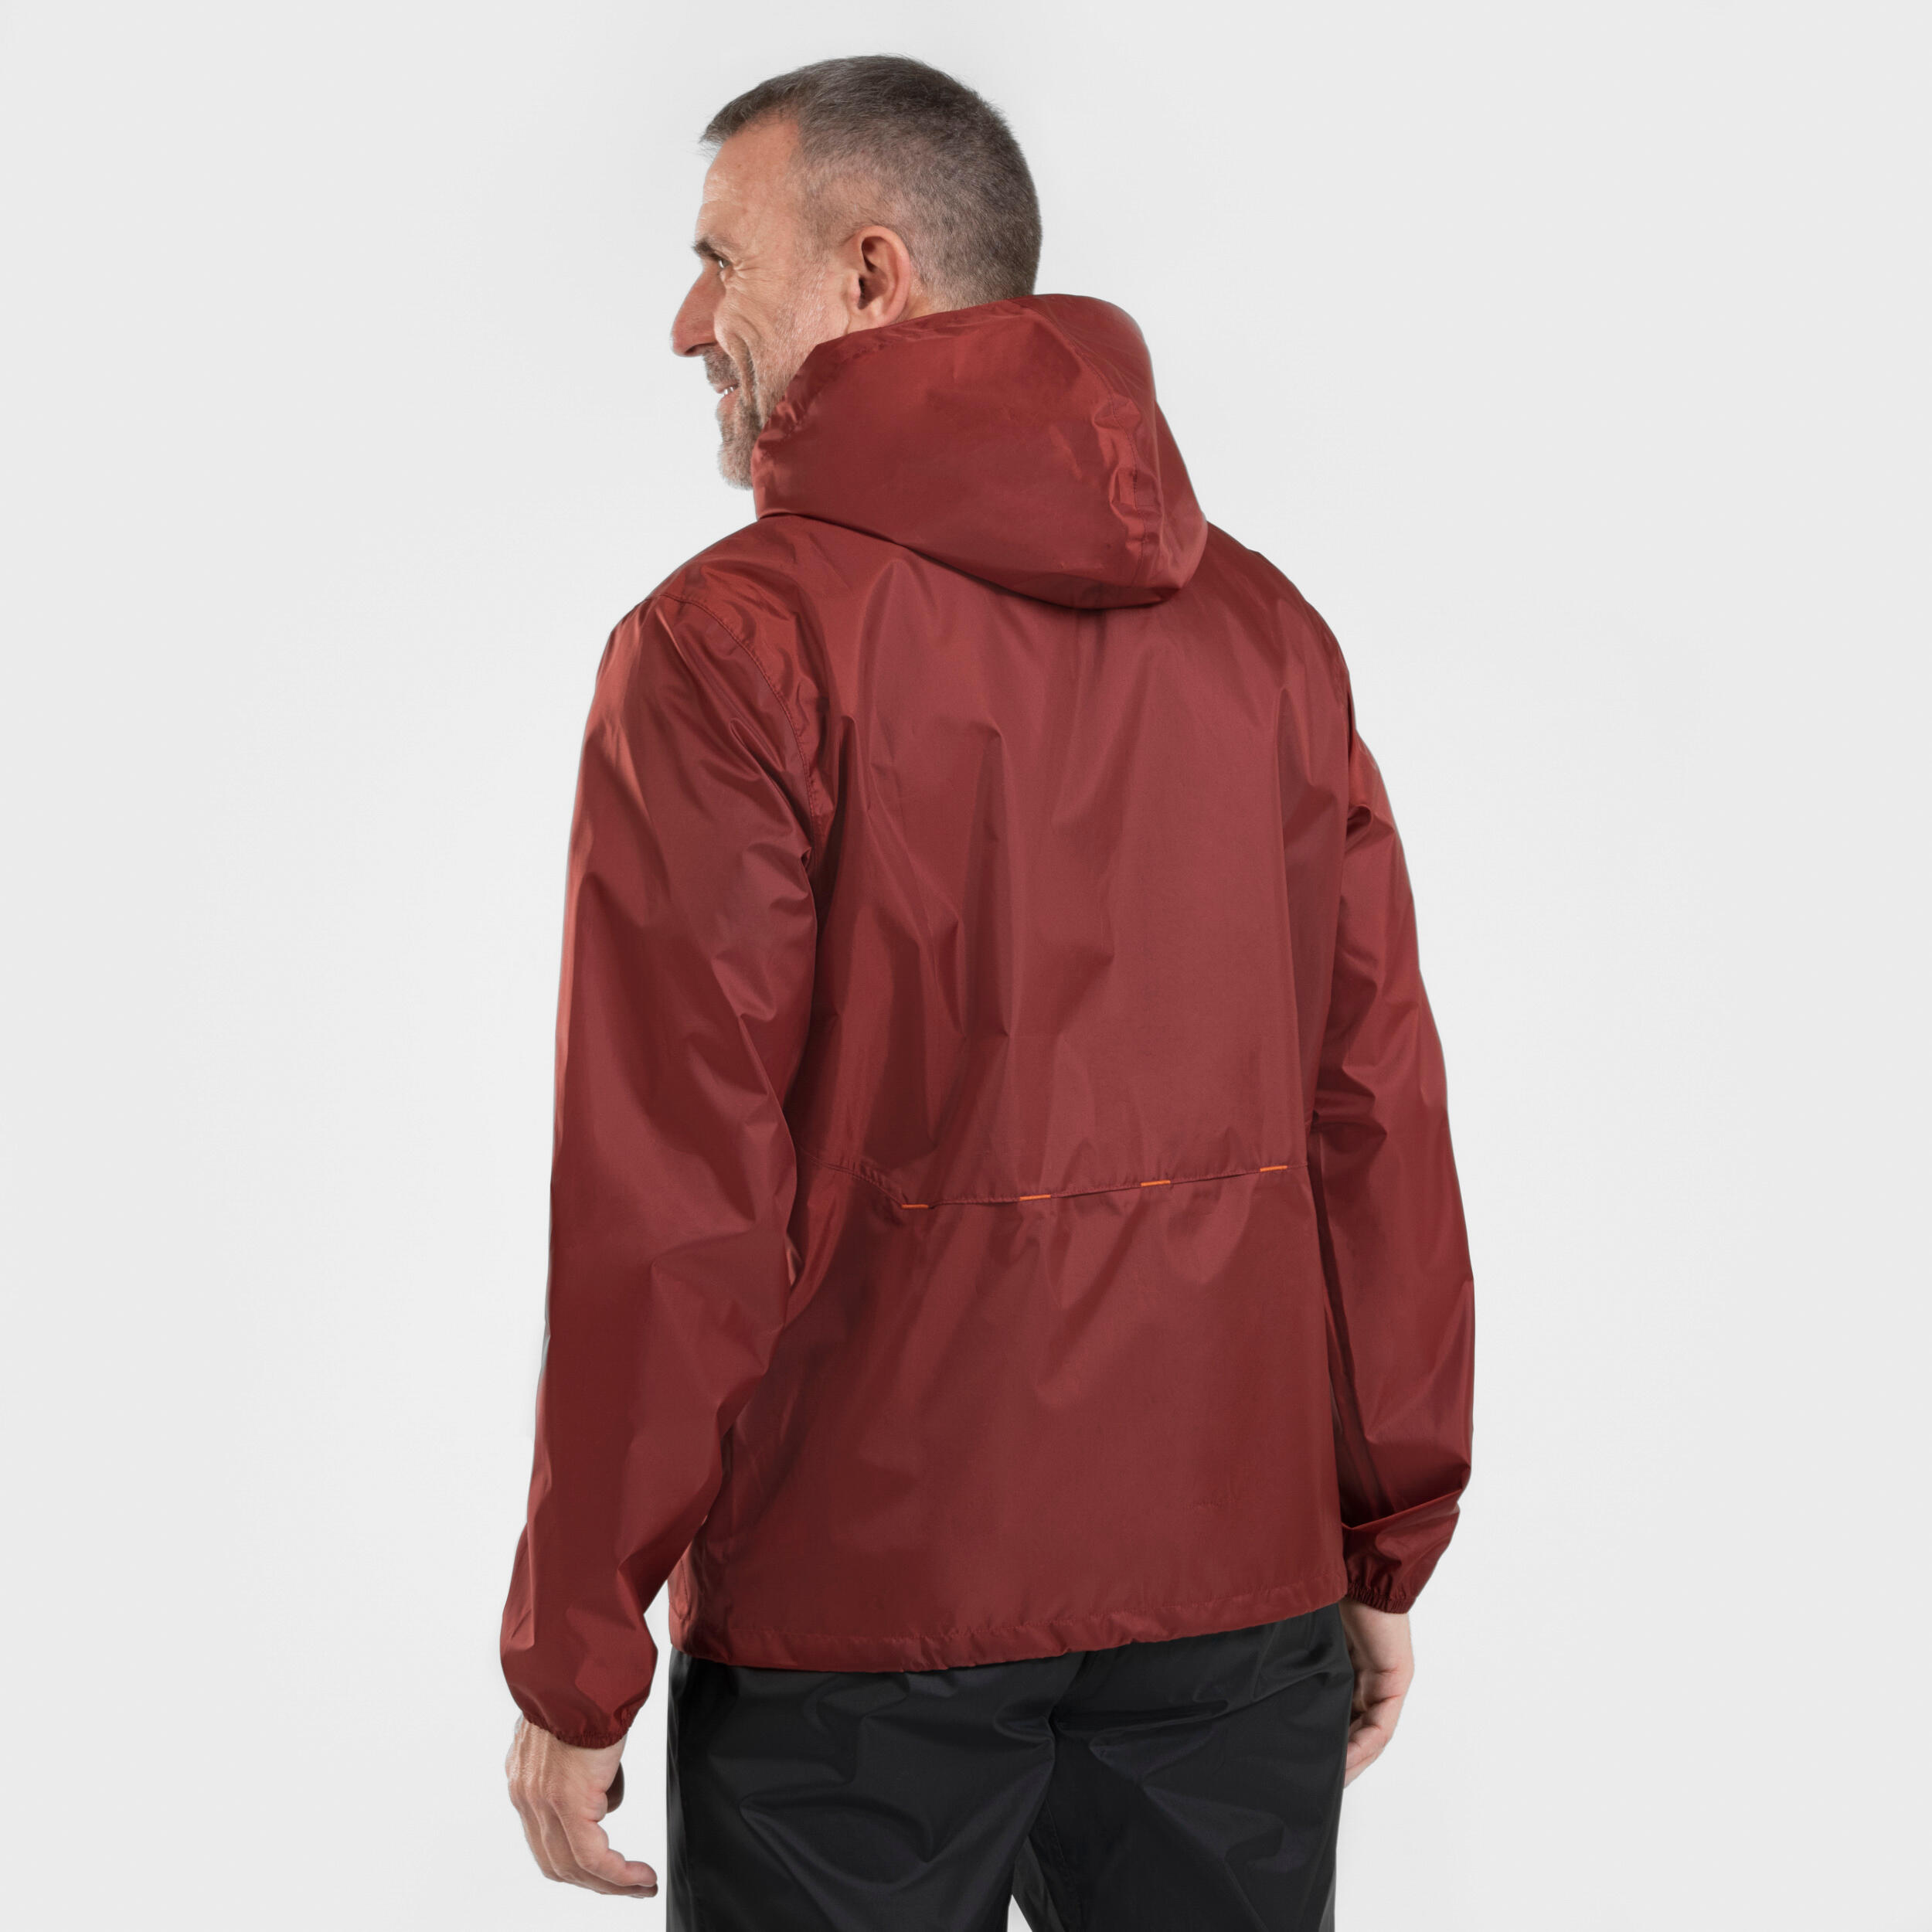 Men's Waterproof Hiking Jacket - Raincut Full Zip 5/8